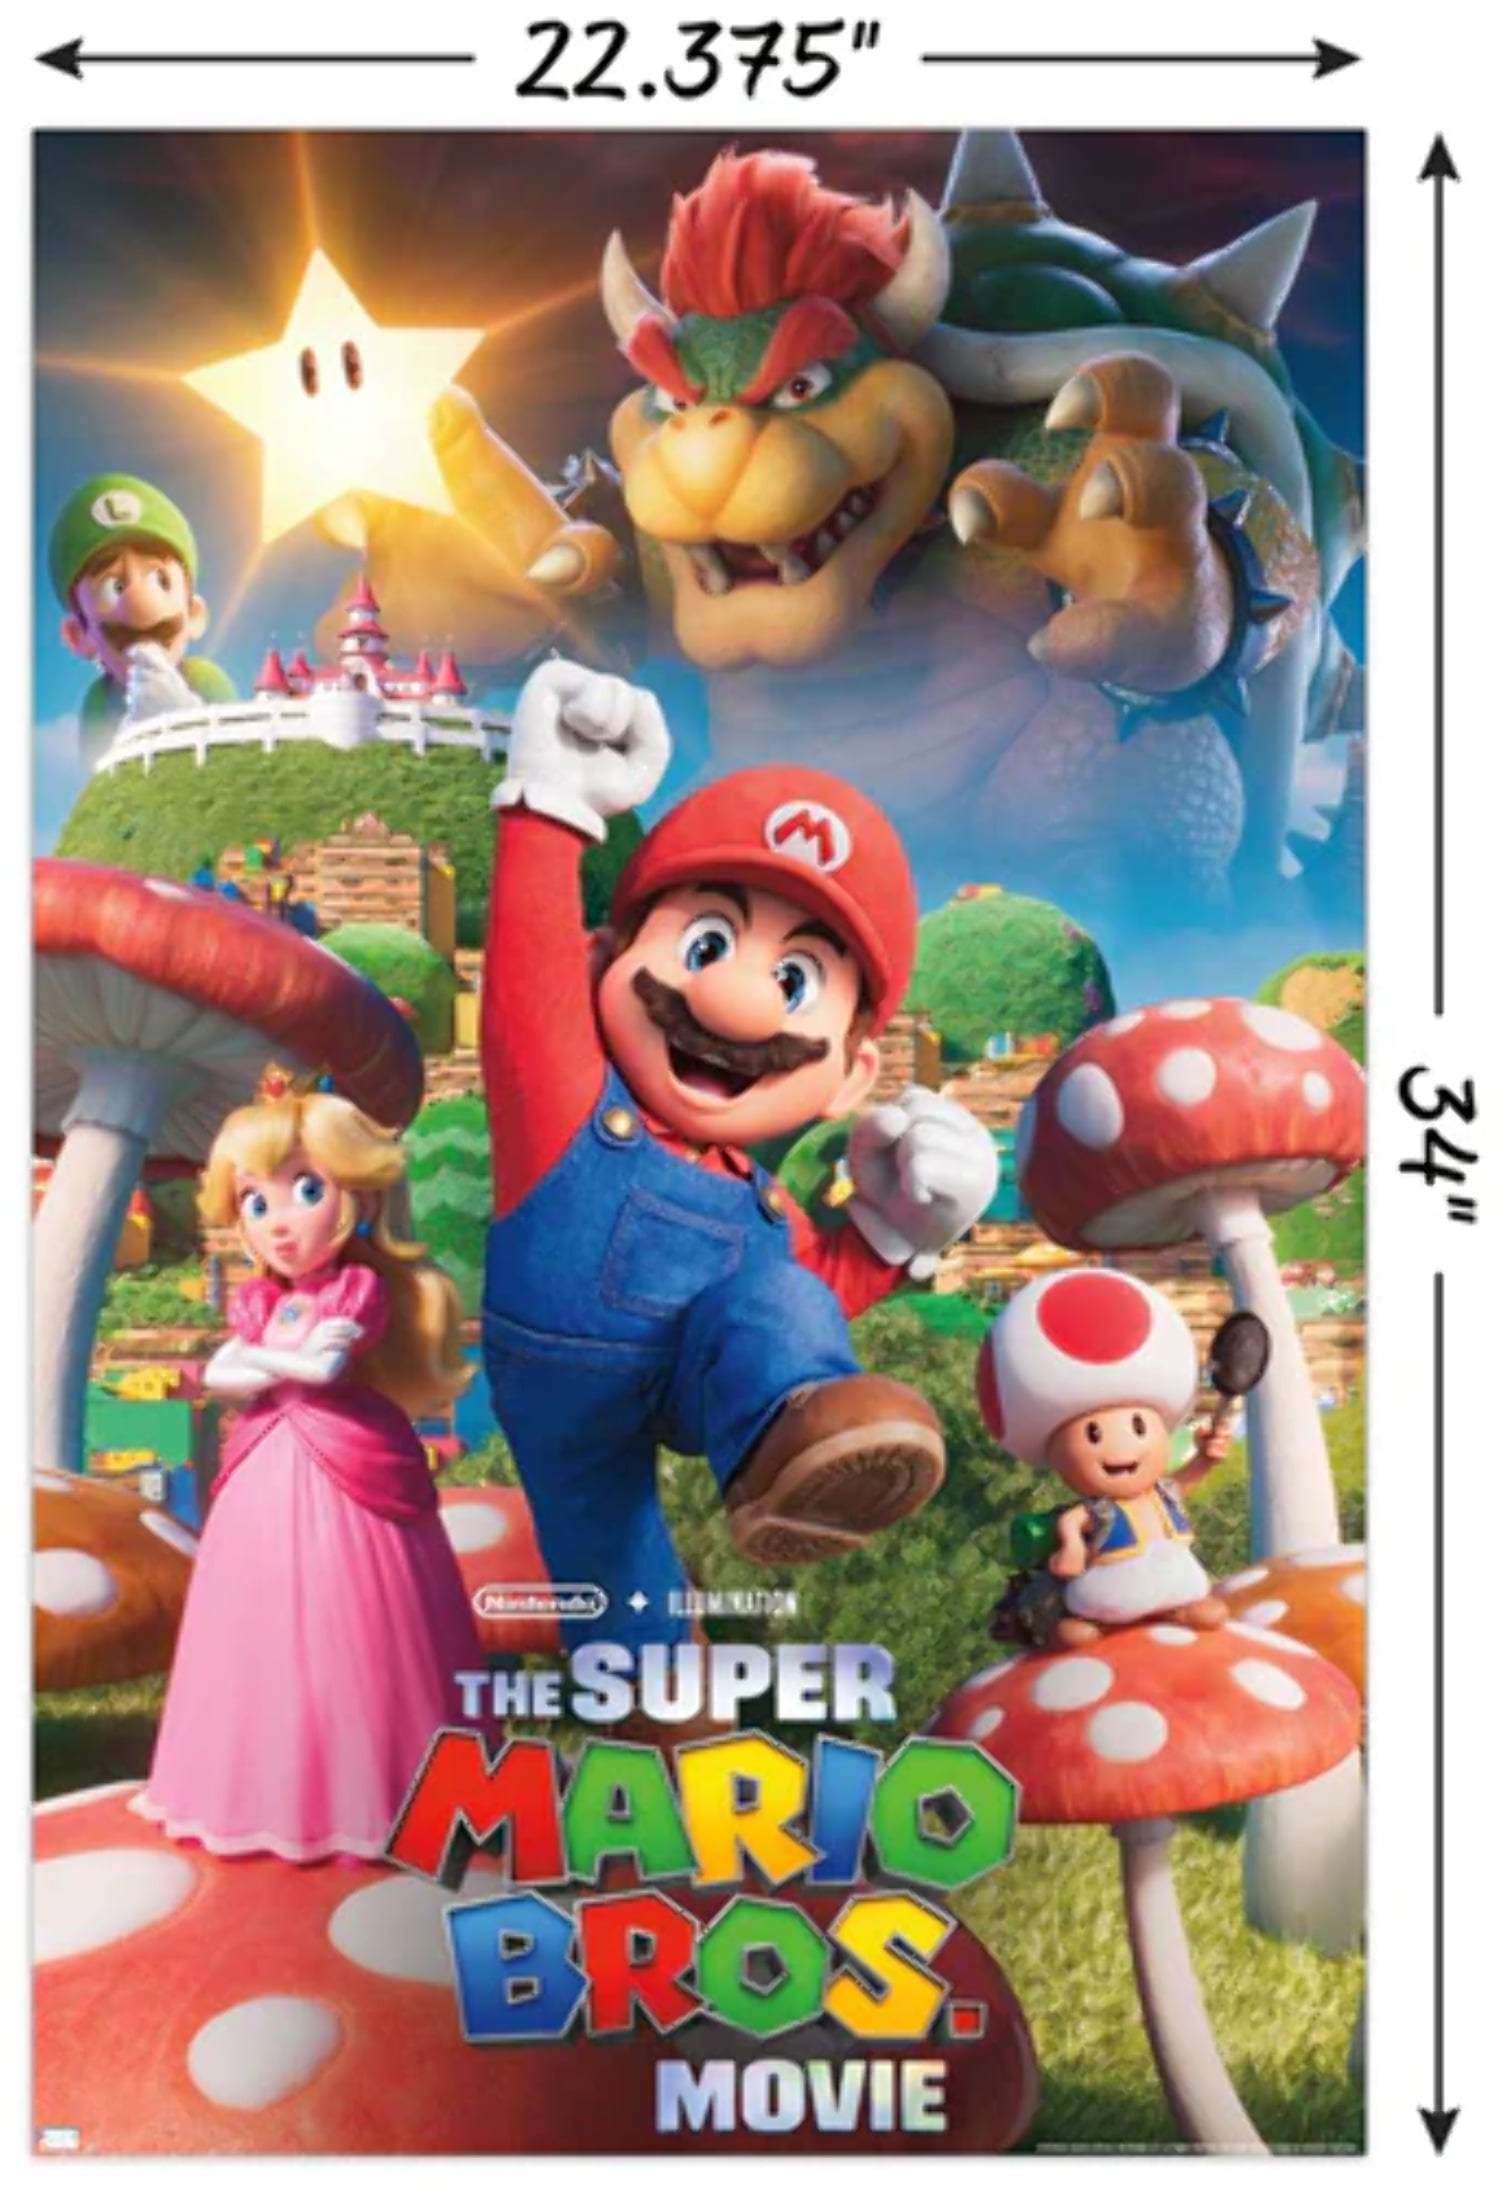 The Super Mario Bros. Movie (aka Super Mario Bros: The Movie